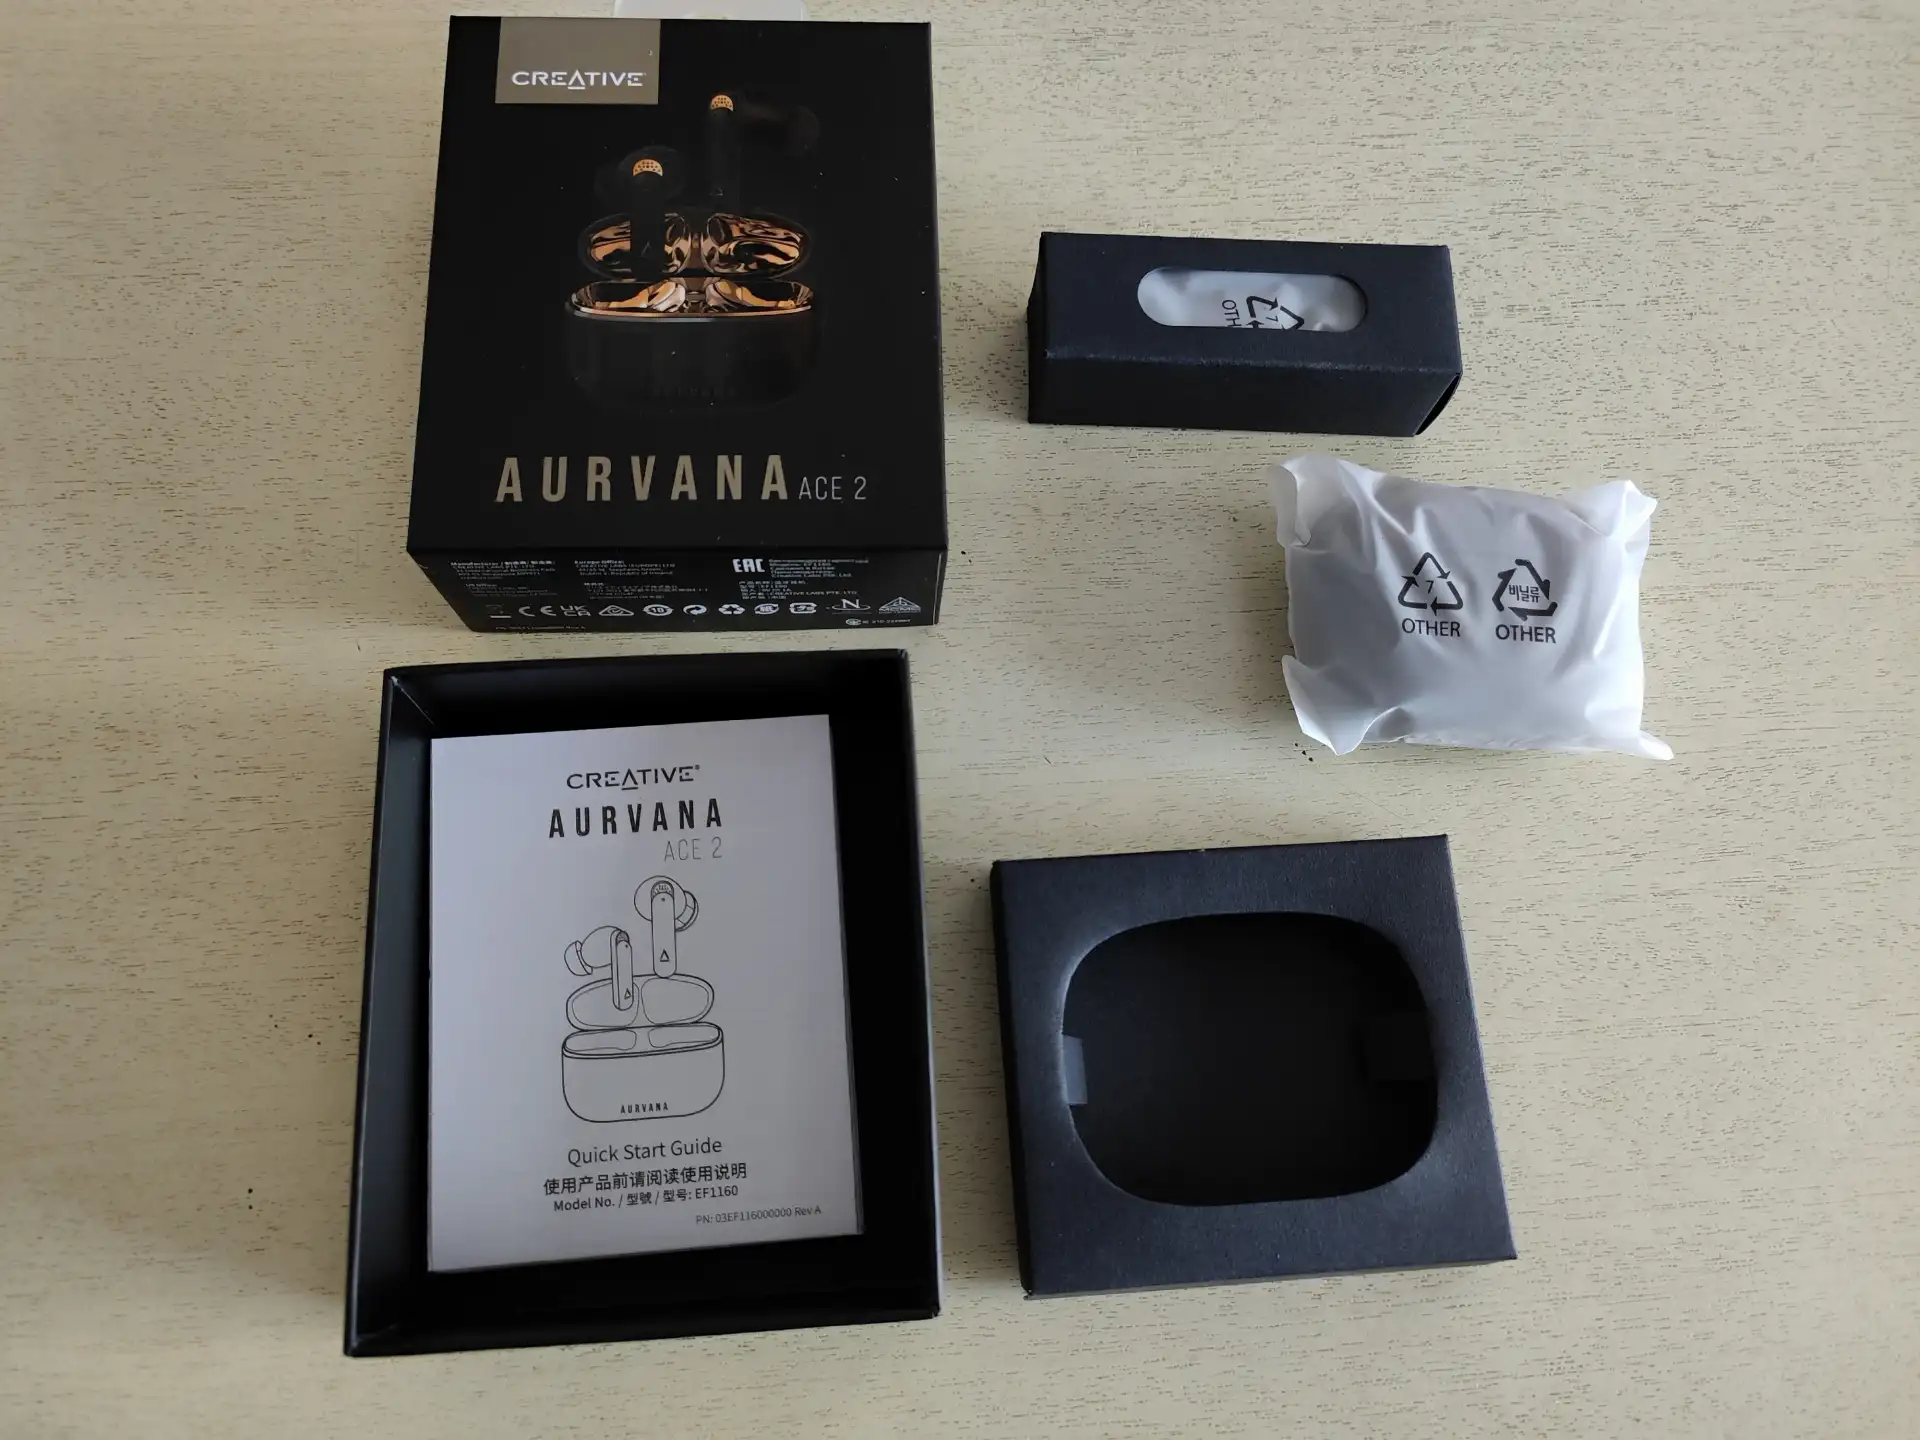 Creative Aurvana Ace 2 - rivoluzione MEMS e aptX Lossless per una qualità audio senza compromessi